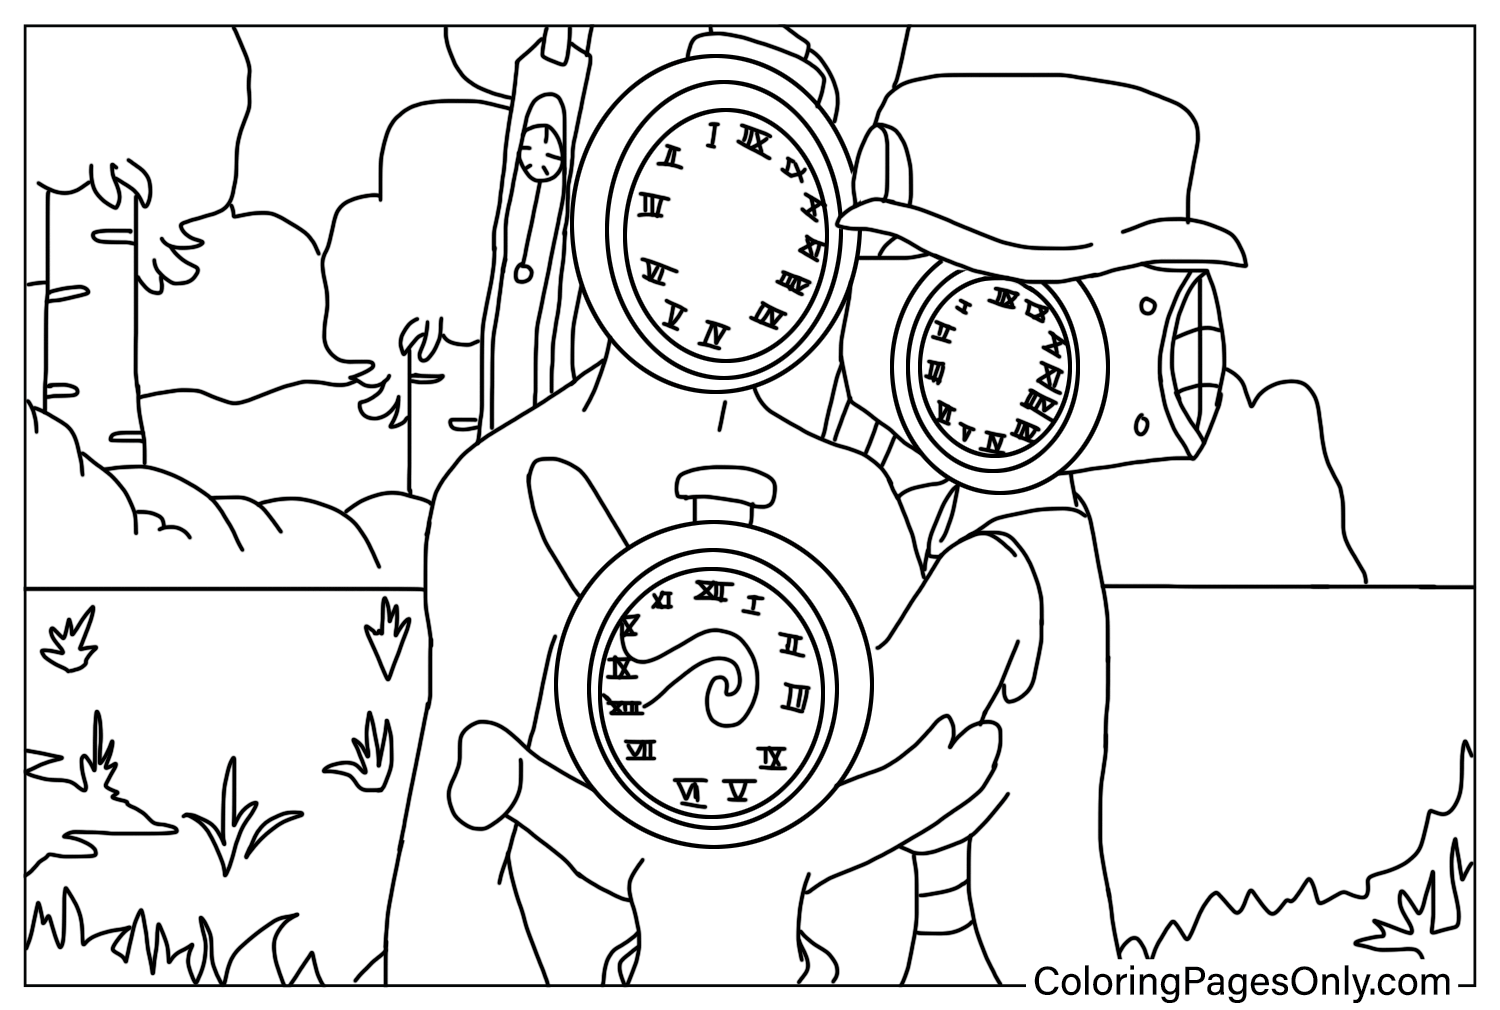 Printable Titan ClockMan Coloring Sheets from Titan Clock Man